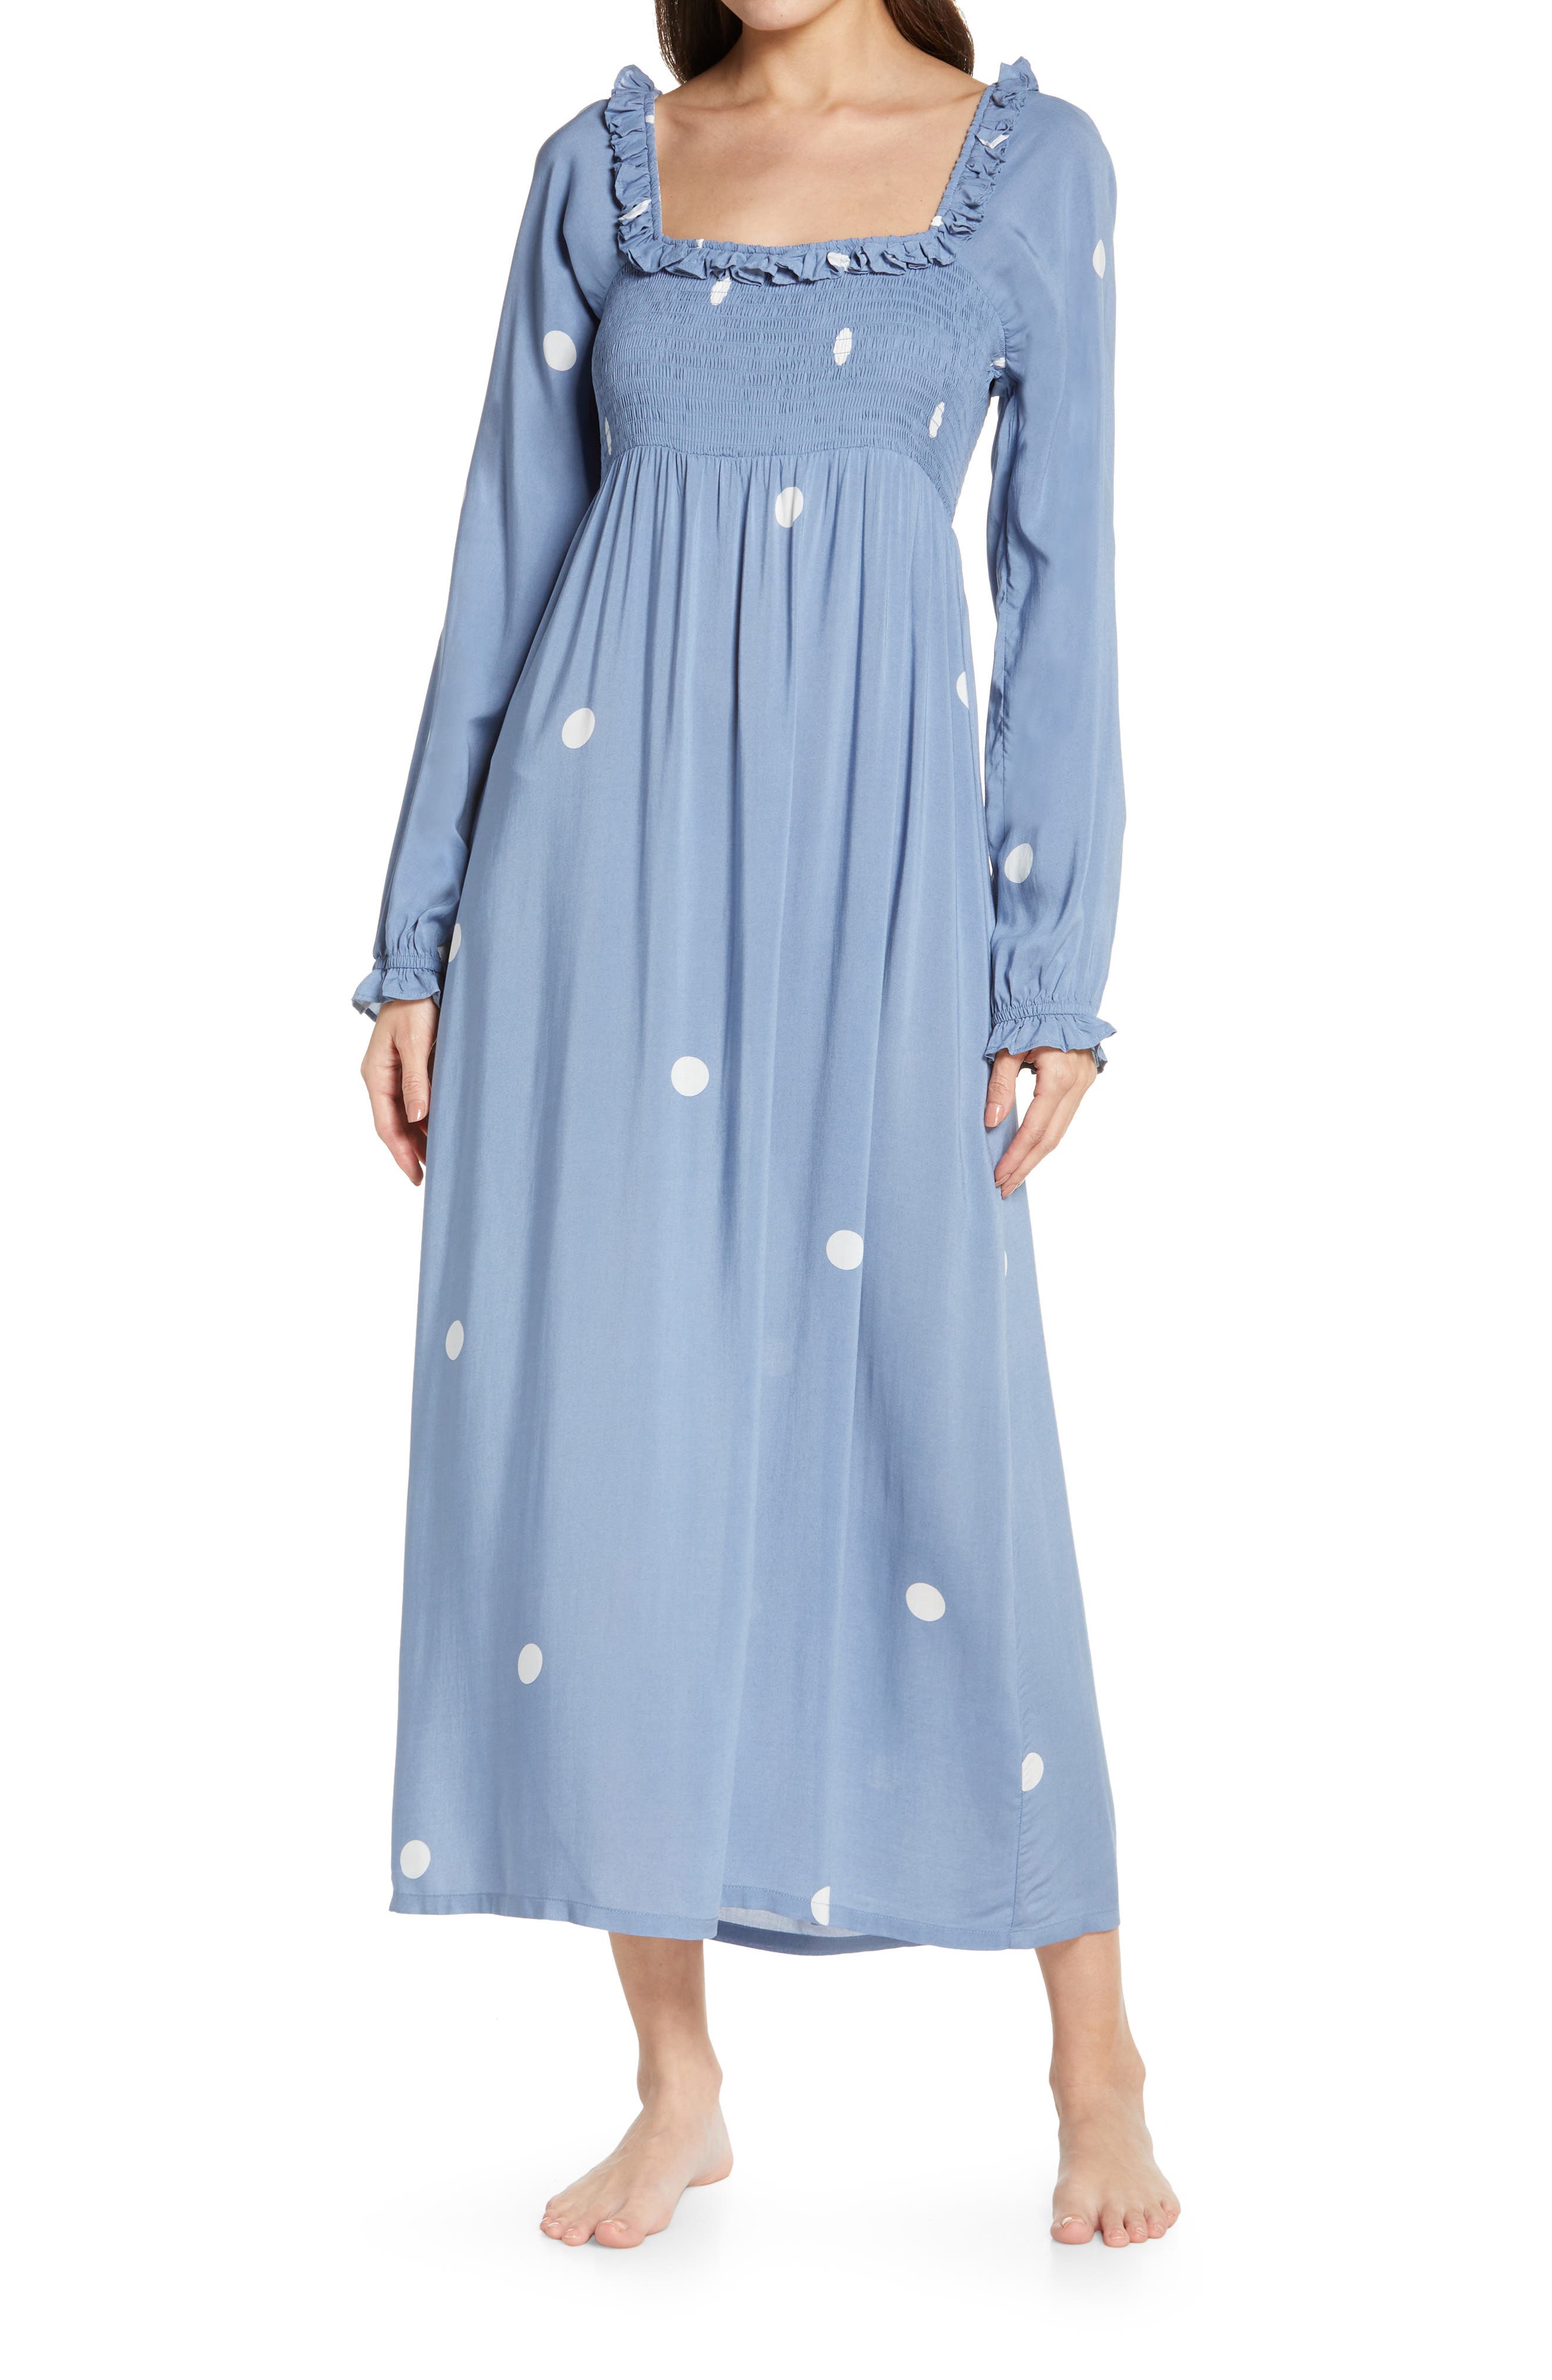 Women's Blue Nightgowns ☀ Nightshirts ...